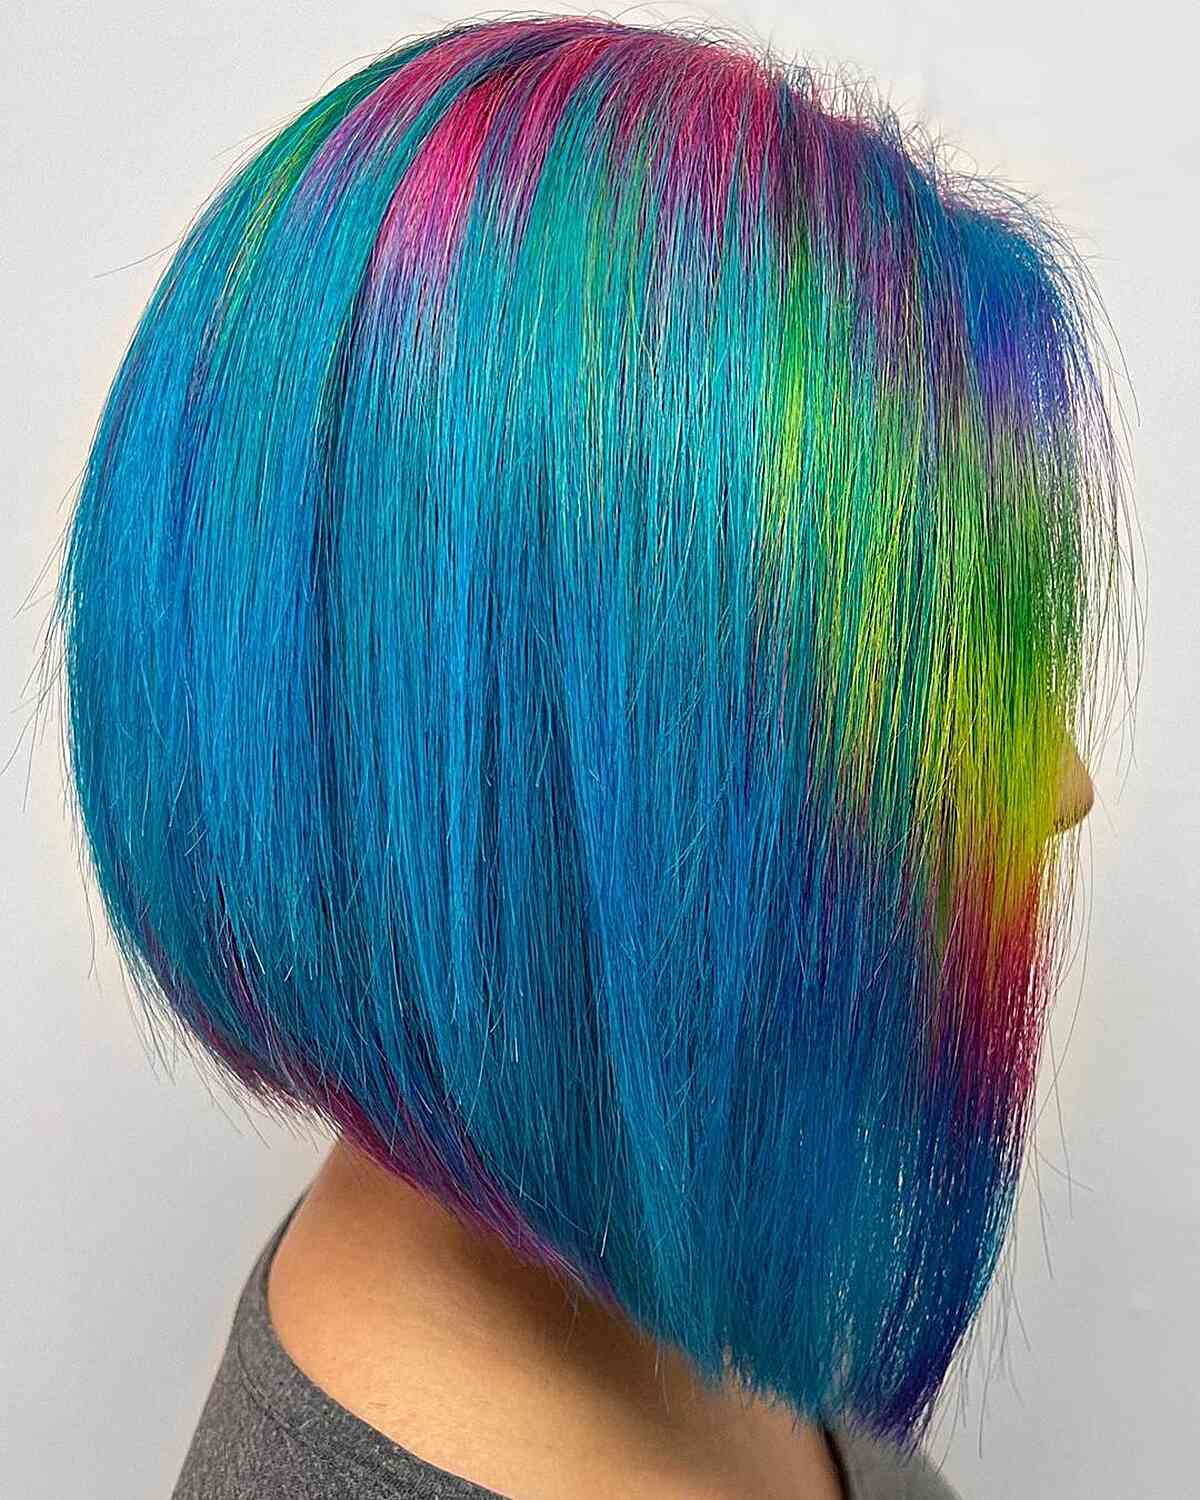 Inverted Straight Bob with Vivid Rainbow Colors